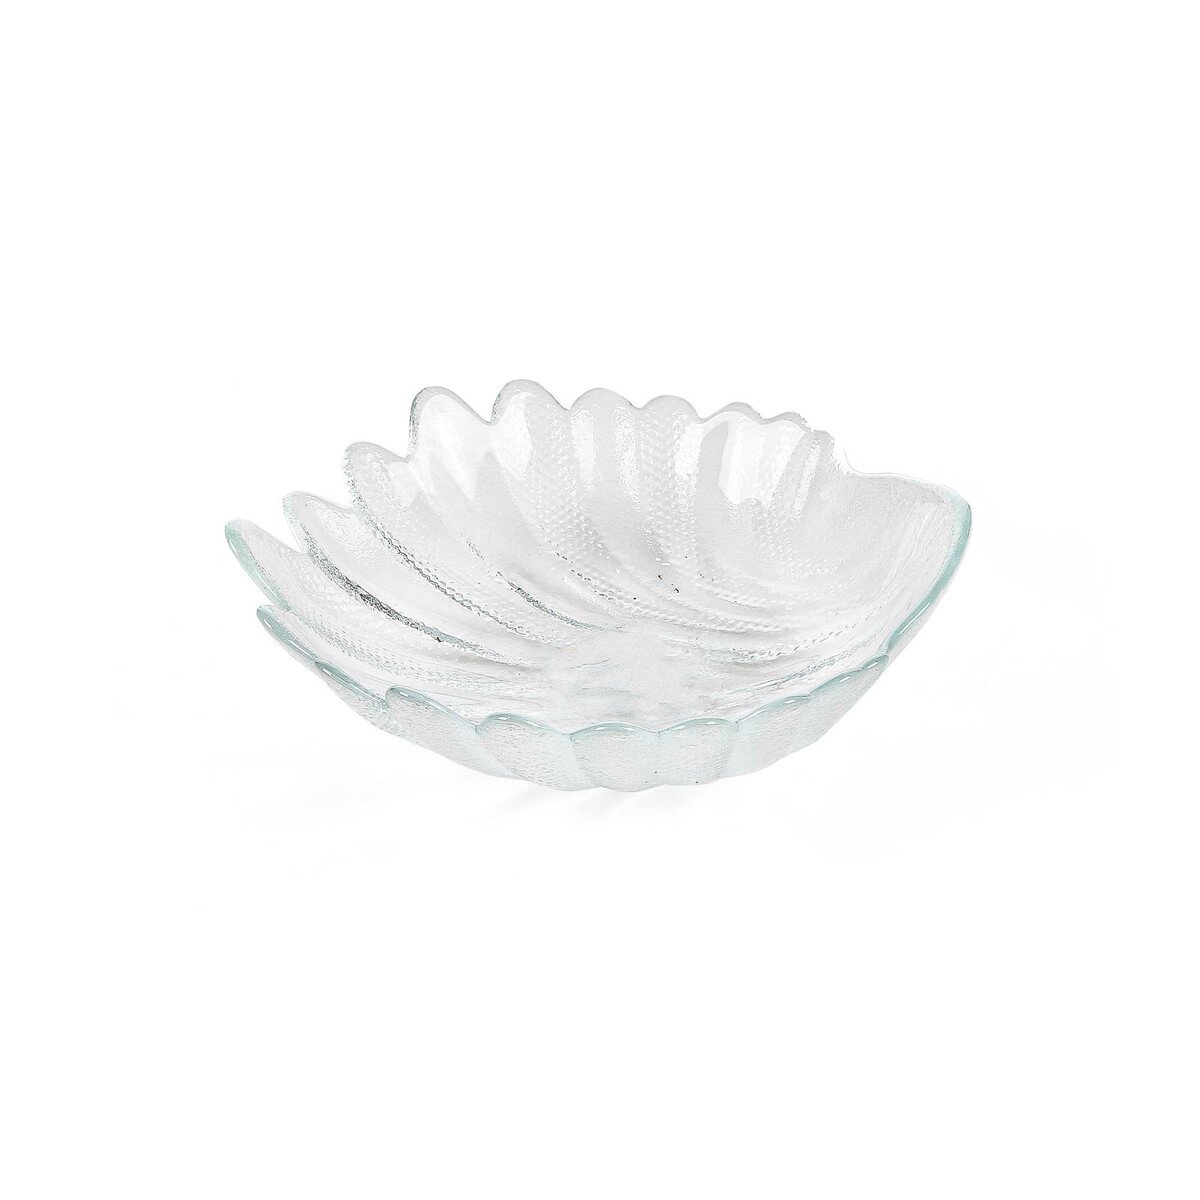 Glascom Decorative Glass Bowl, FV03